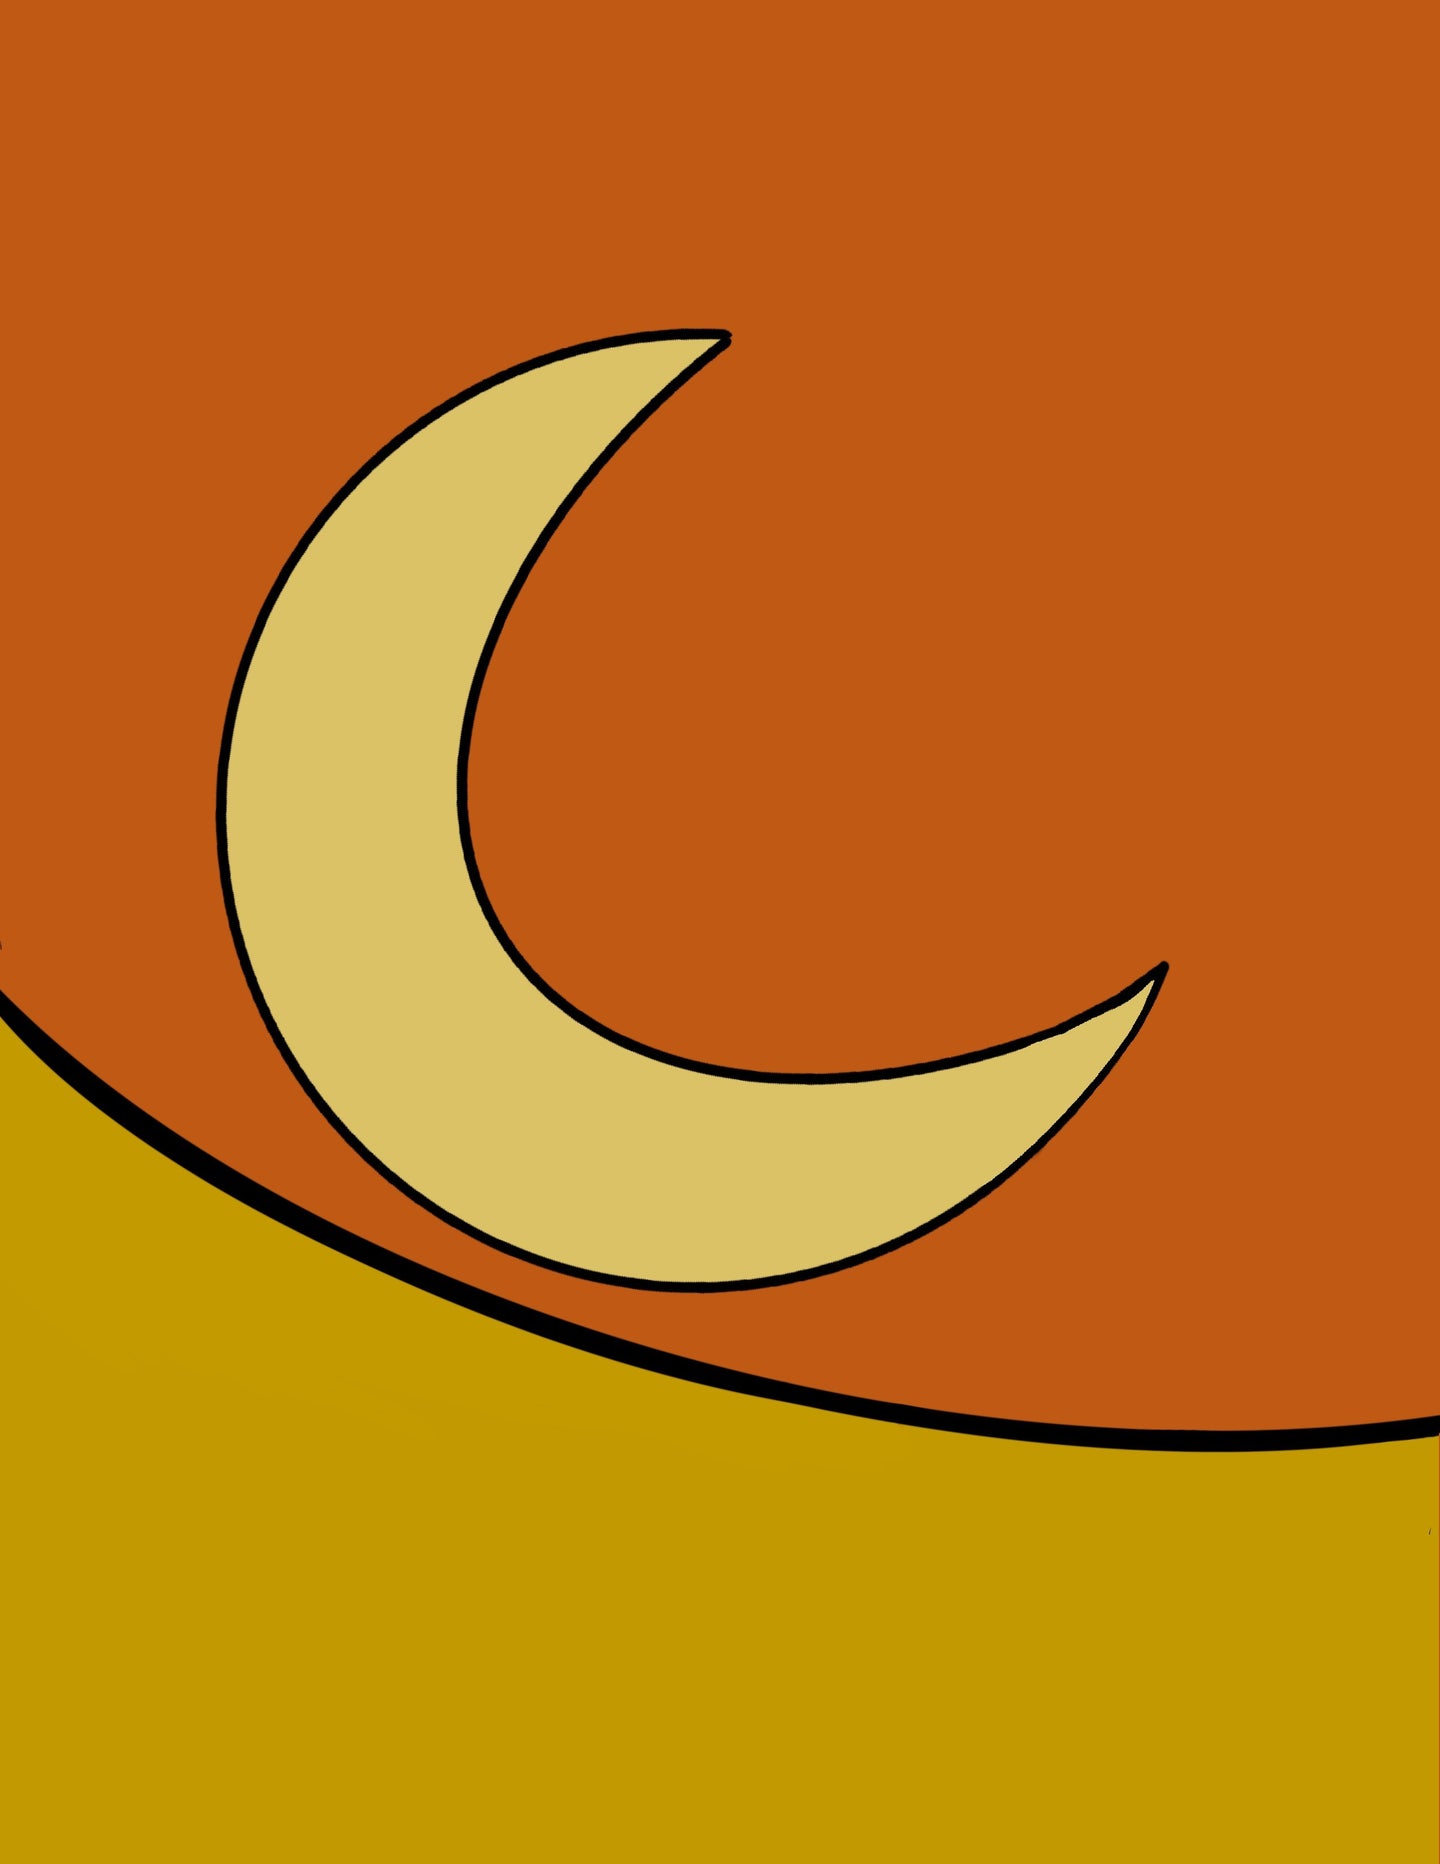 Desert sun and moon prints